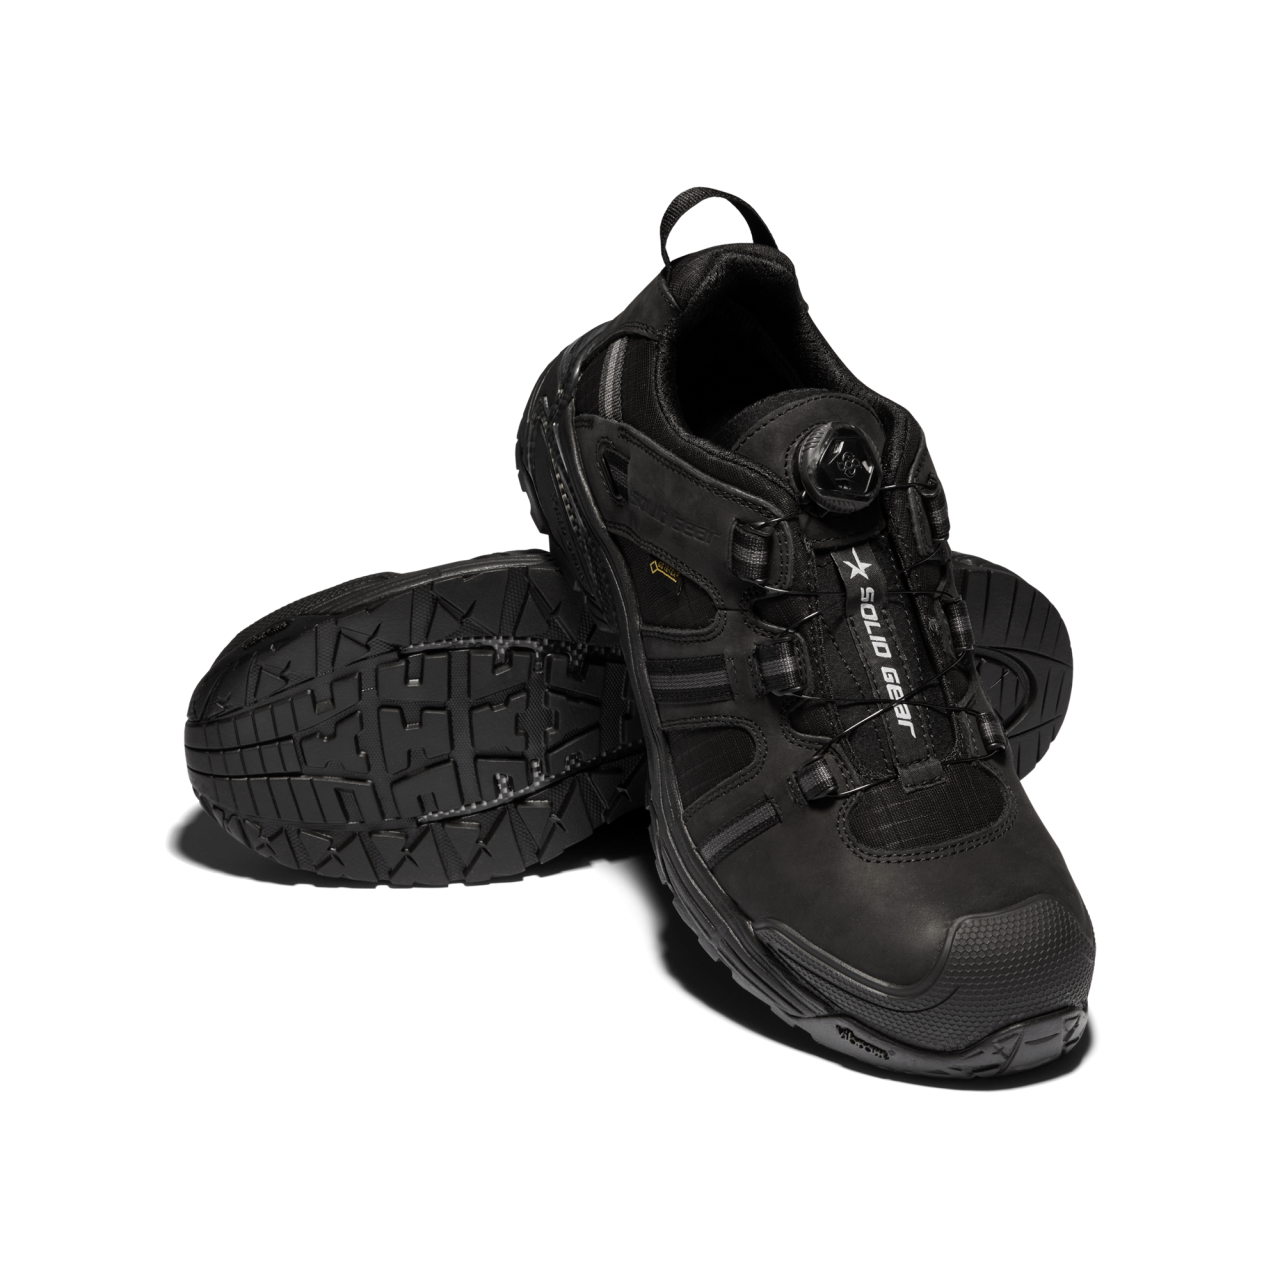 Zapato de seguridad S3 Enforcer GTX talla 38